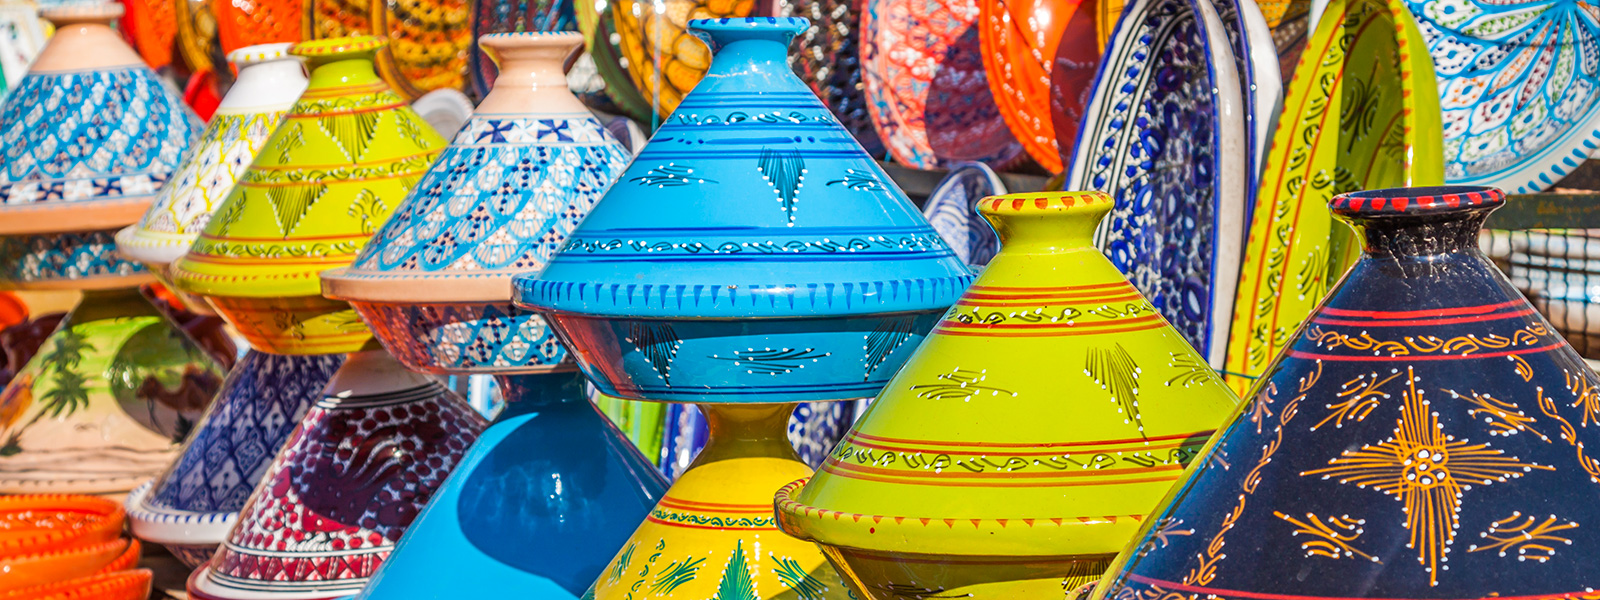 shopping artisanat traditionnel et revisit poterie safi